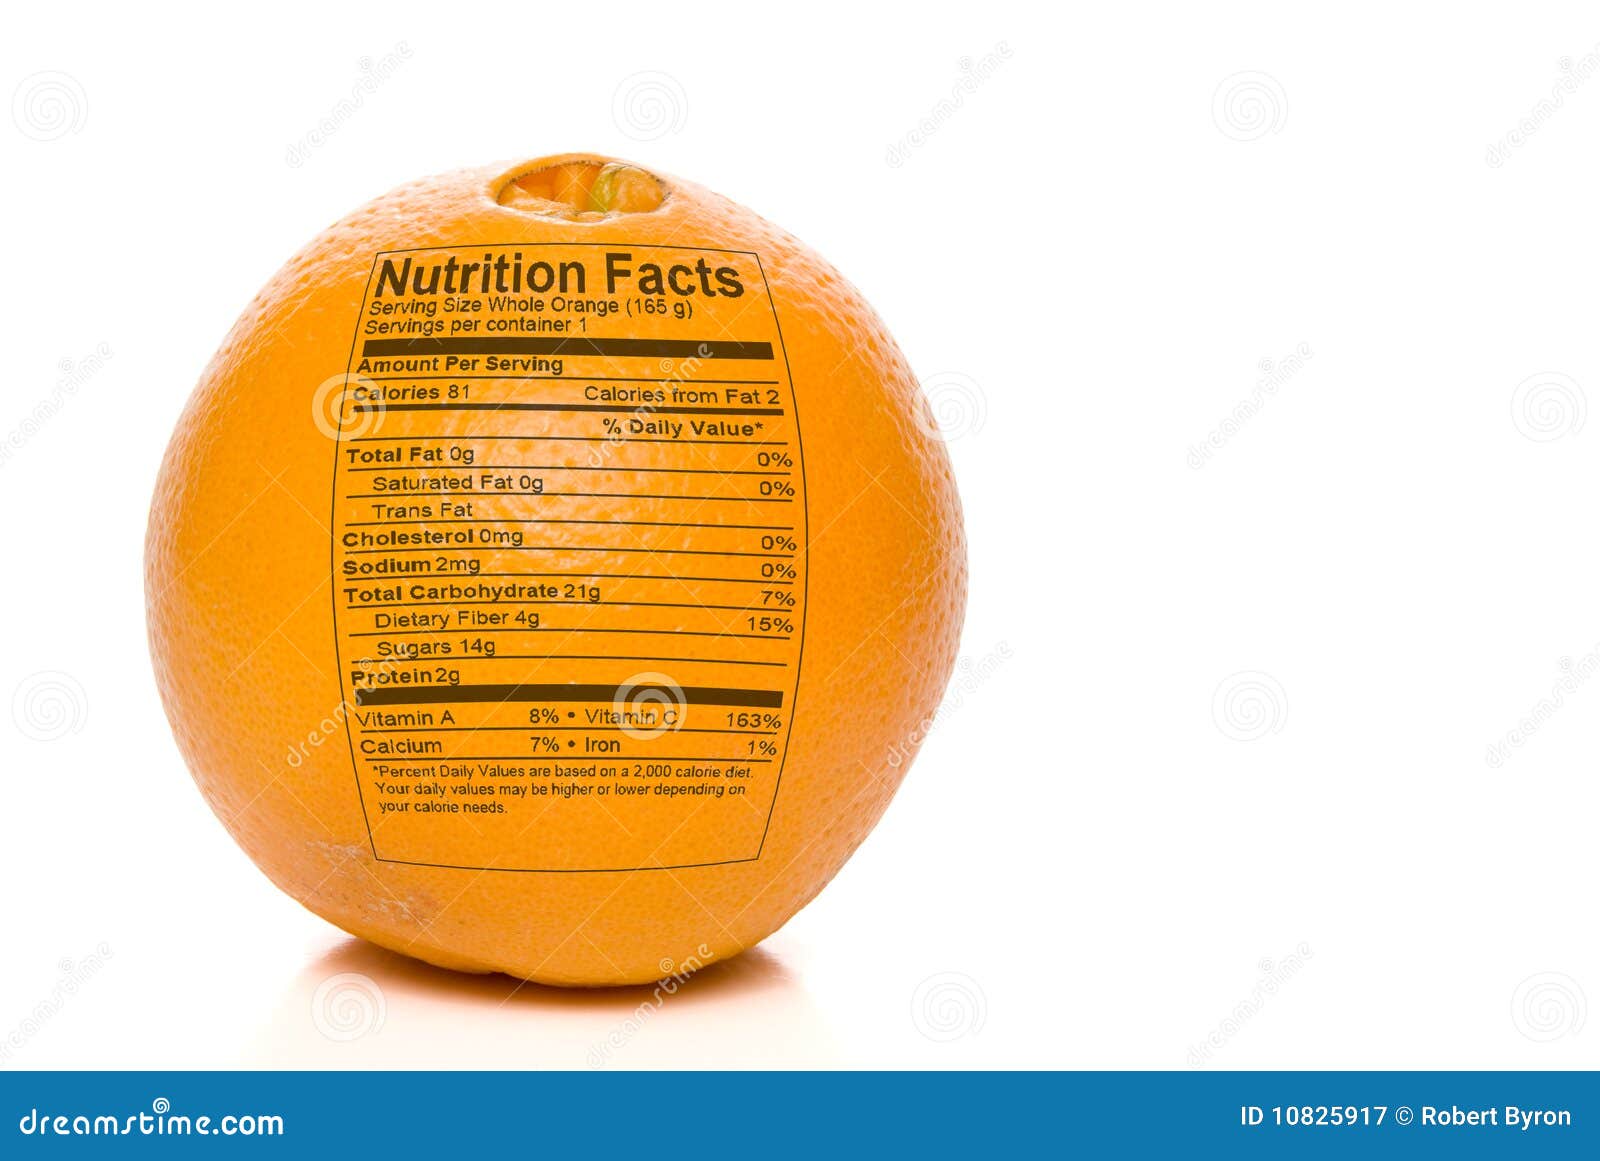 orange nutrition facts